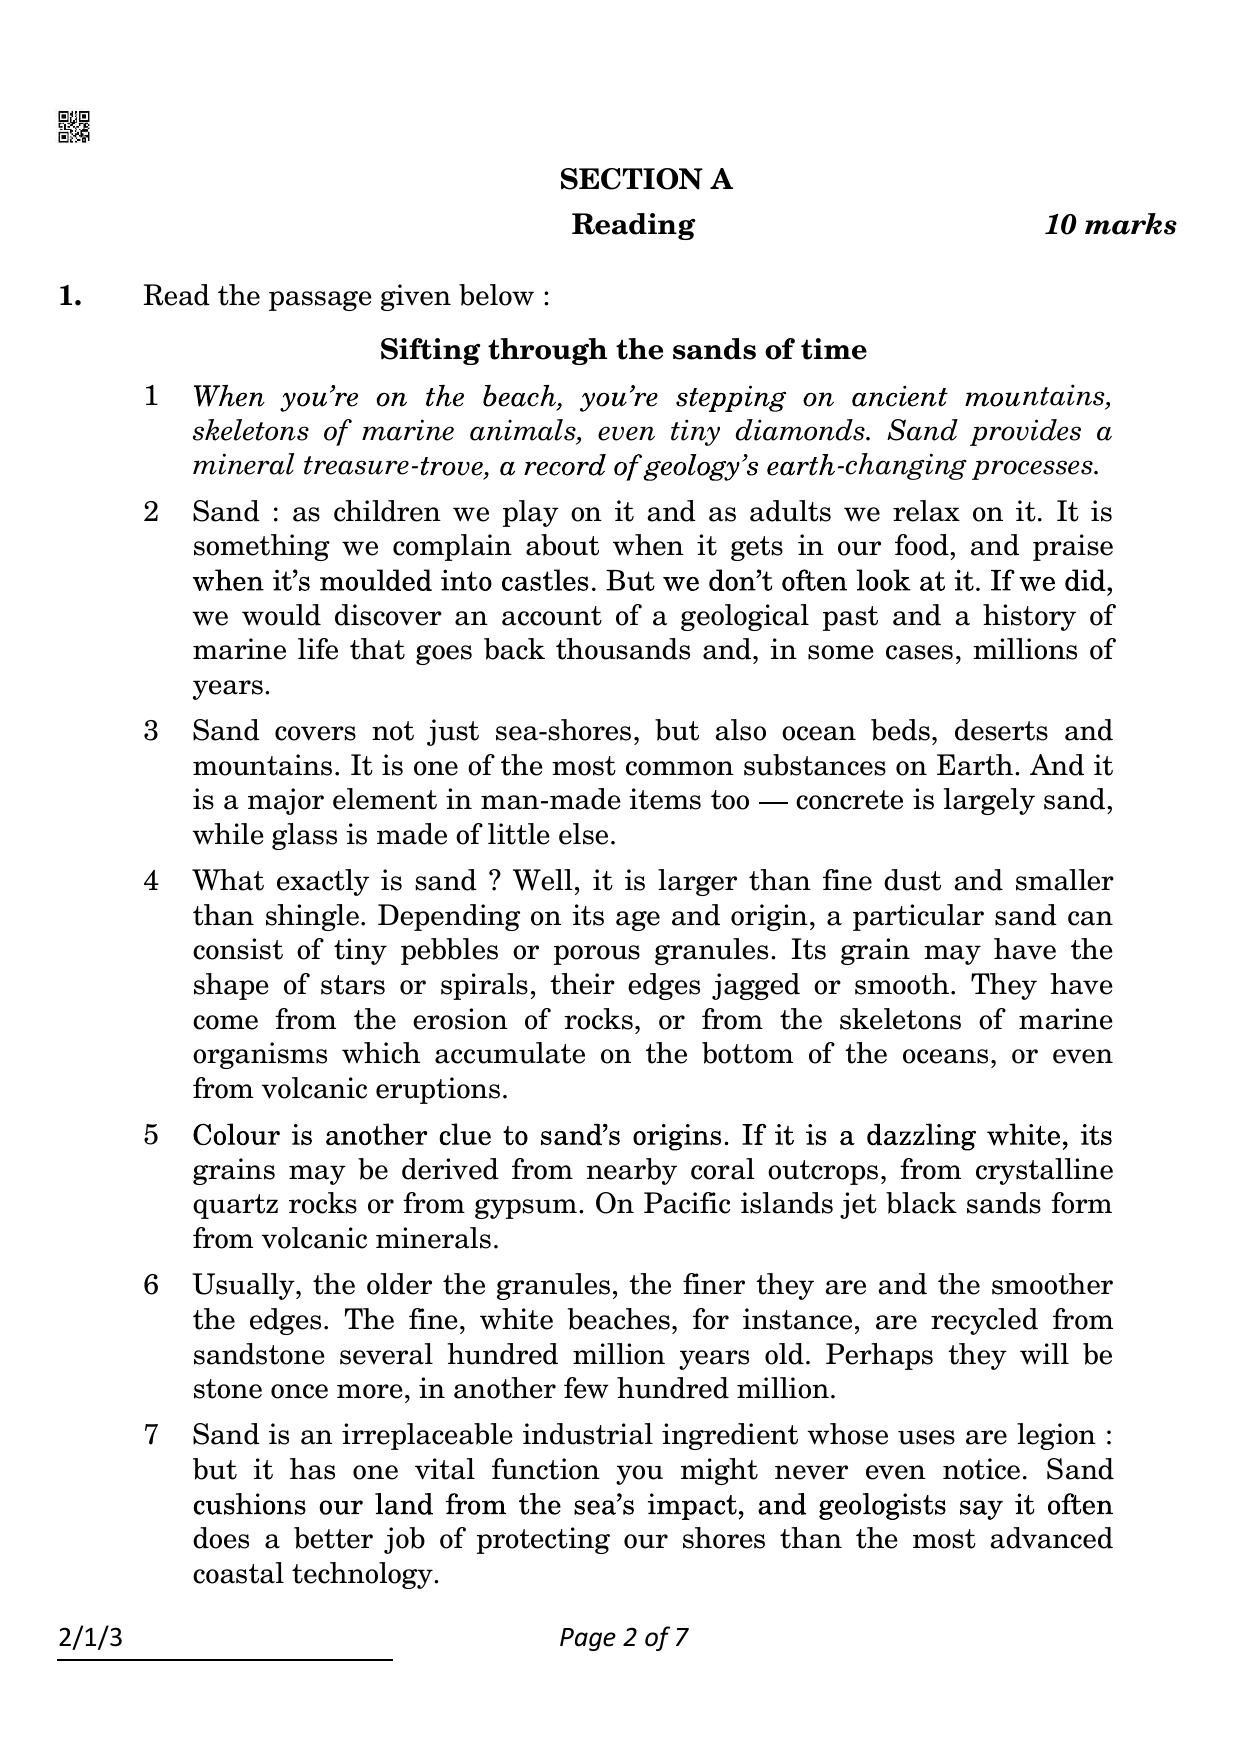 CBSE Class 10 2-1-3 English L & L 2022 Question Paper - Page 2